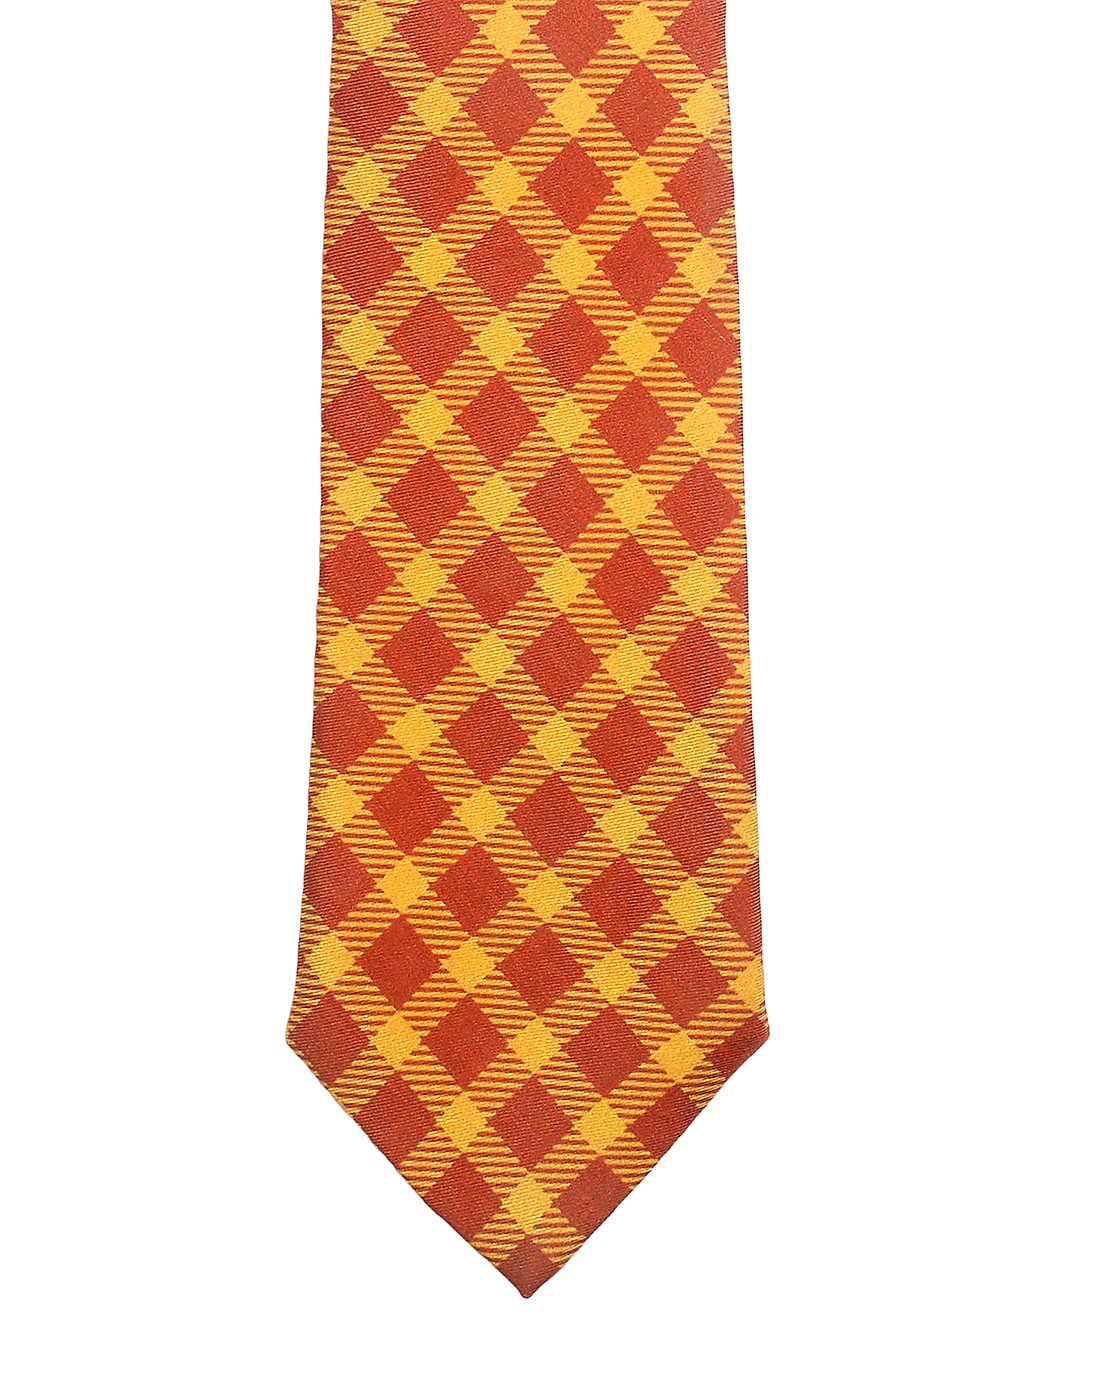 Chokore Red & Orange Tartan tie - Plaids line